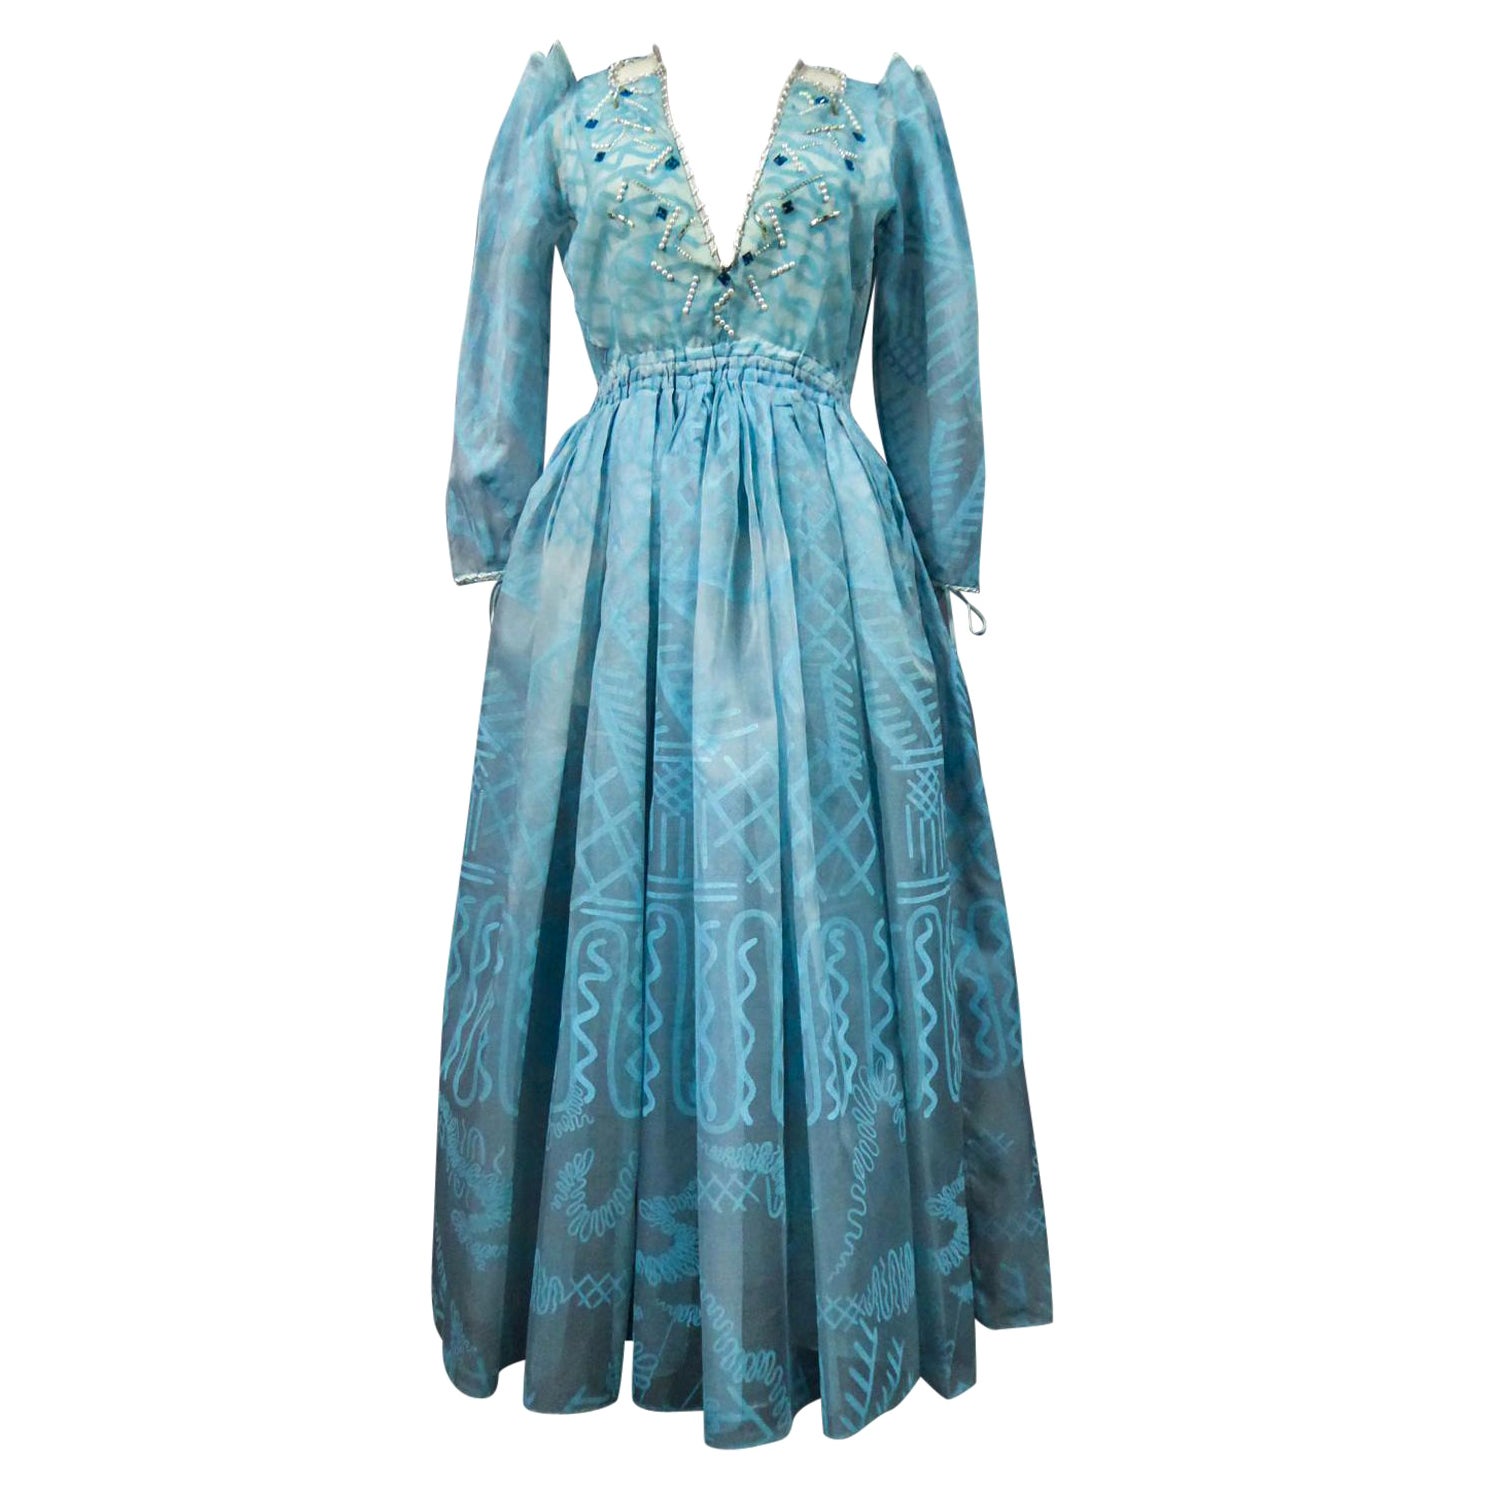 A Zandra Rhodes Evening Dress in Printed Organza - Fortuny Influence- Circa 1980